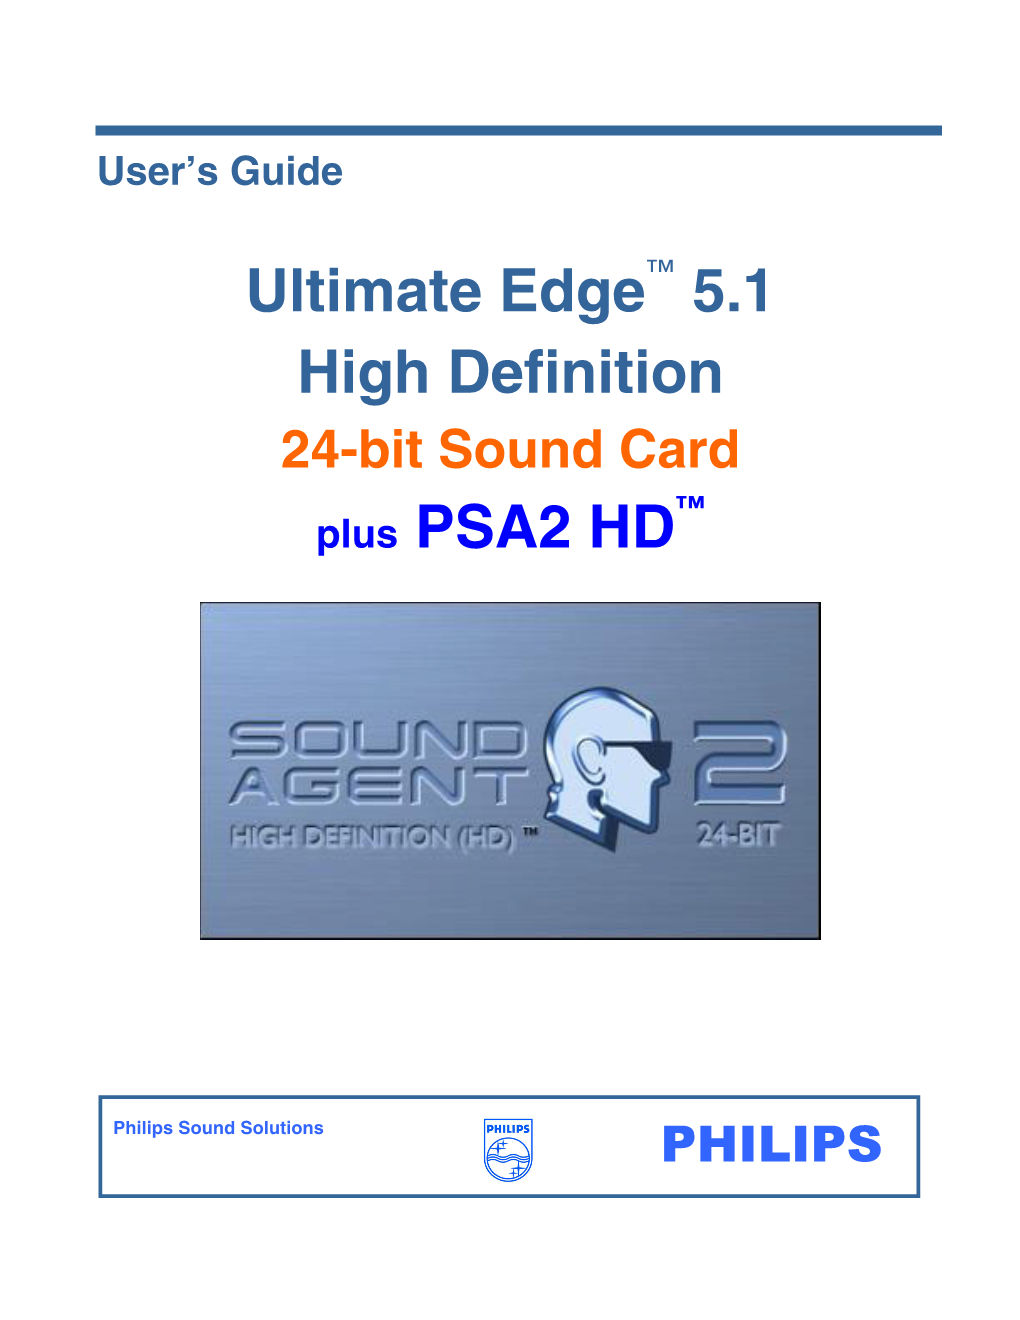 Ultimate Edge 5.1 High Definition Plus PSA2 HD